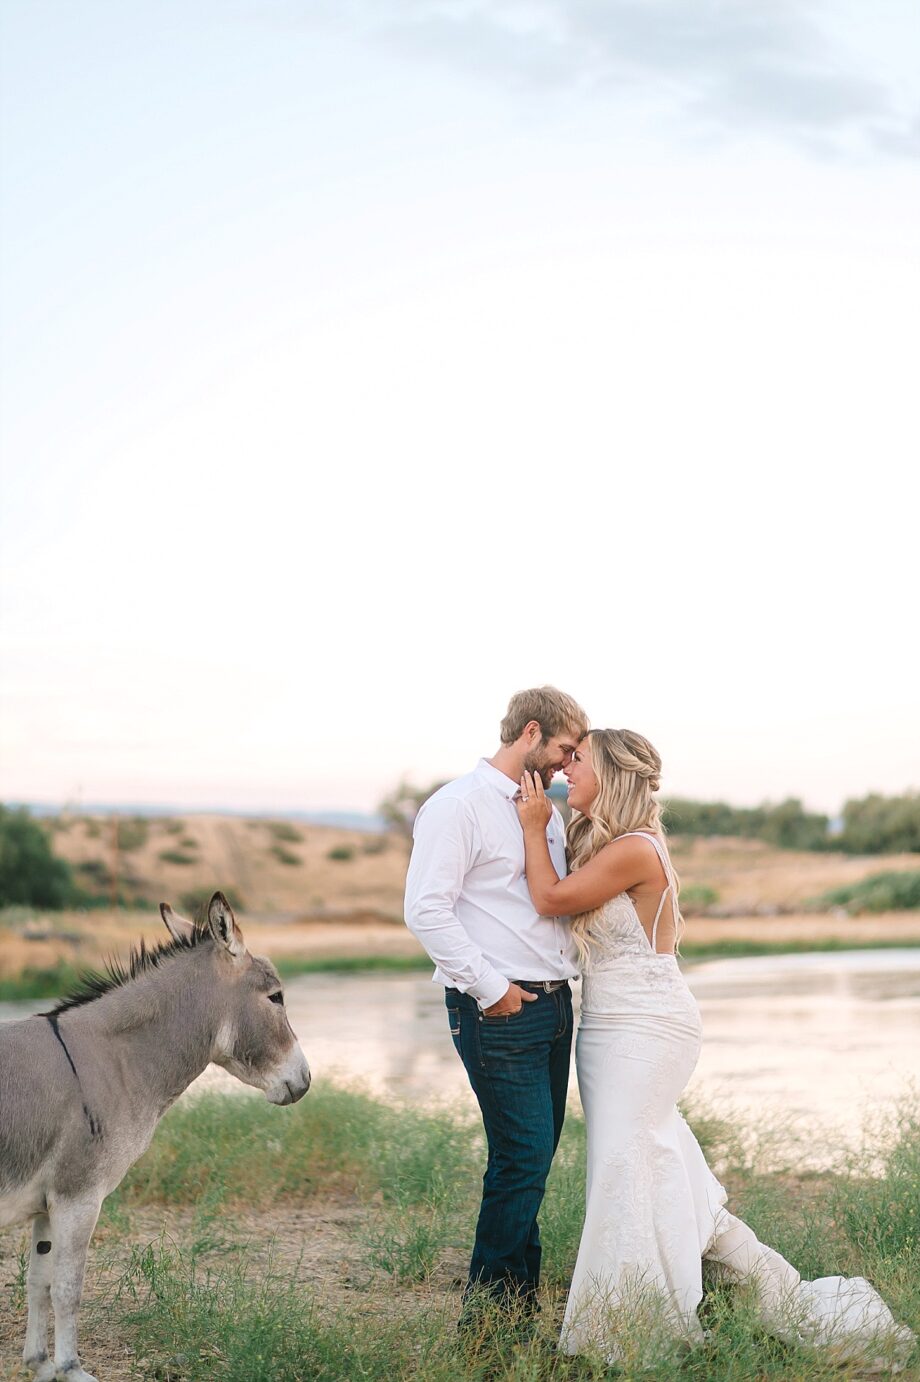 McIntosh Ranch Wedding Ellensburg WA Blake and Korteney bride and groom in a field with a donkey